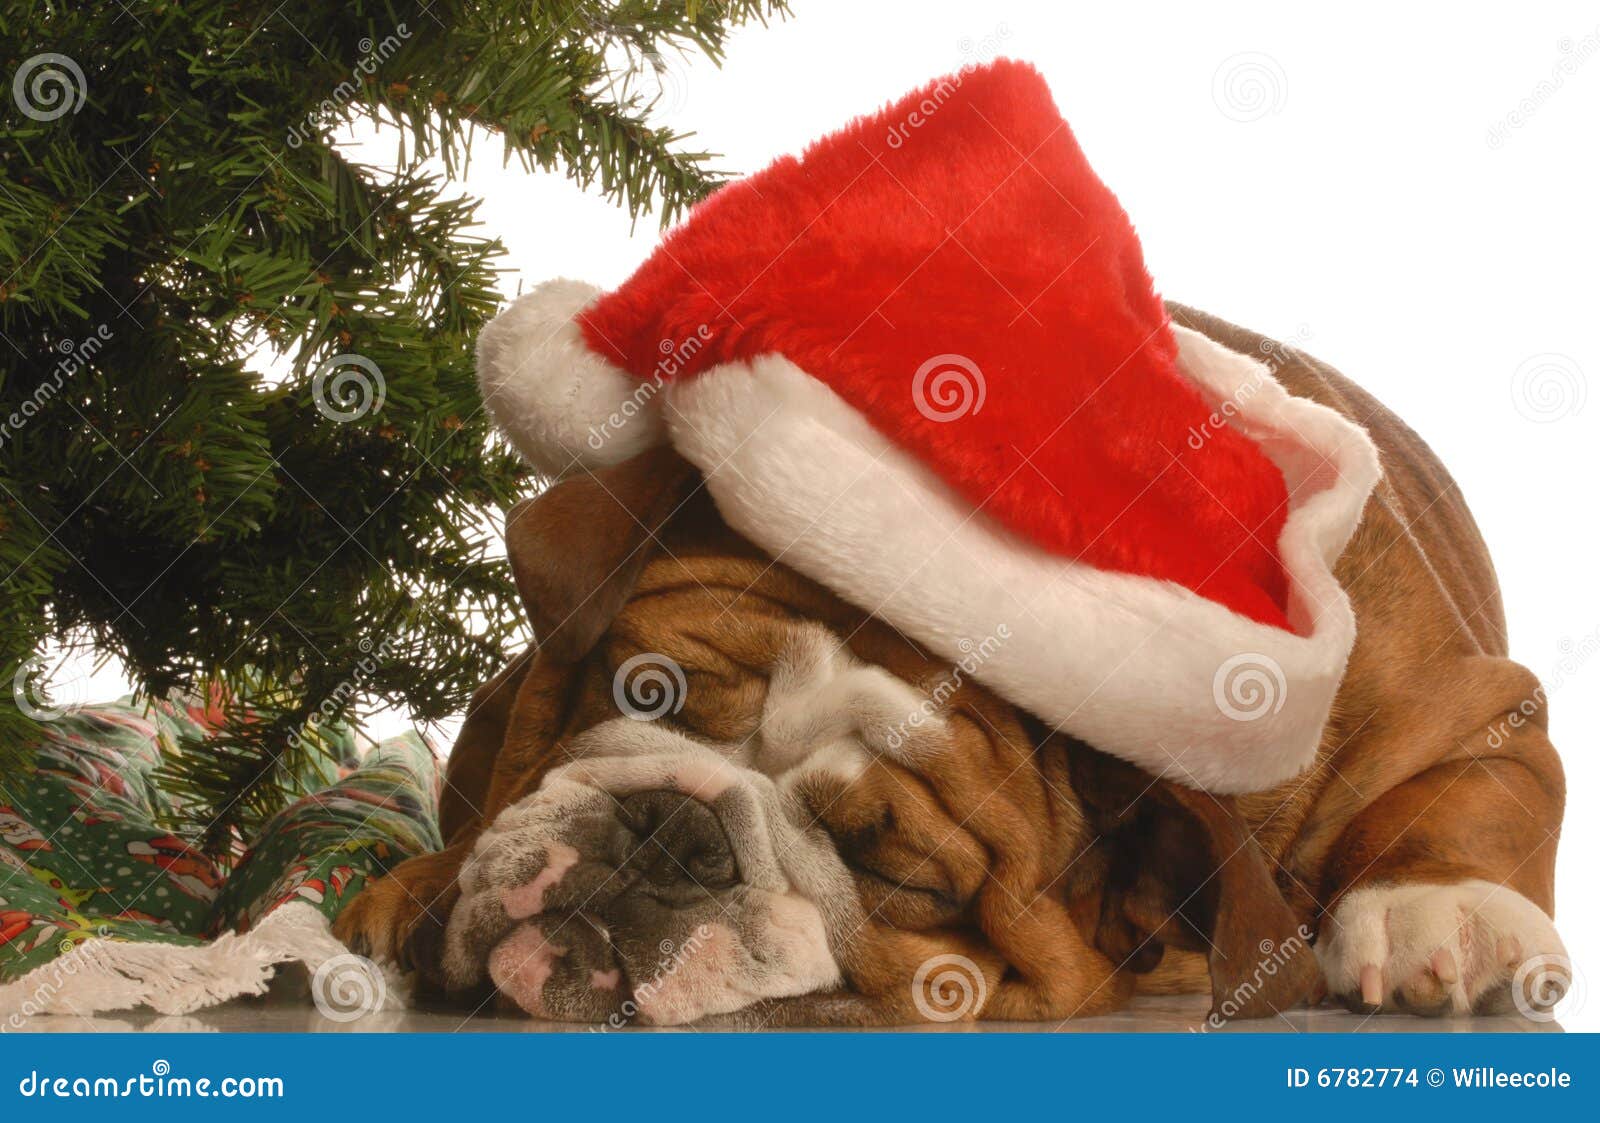 bulldog under christmas tree